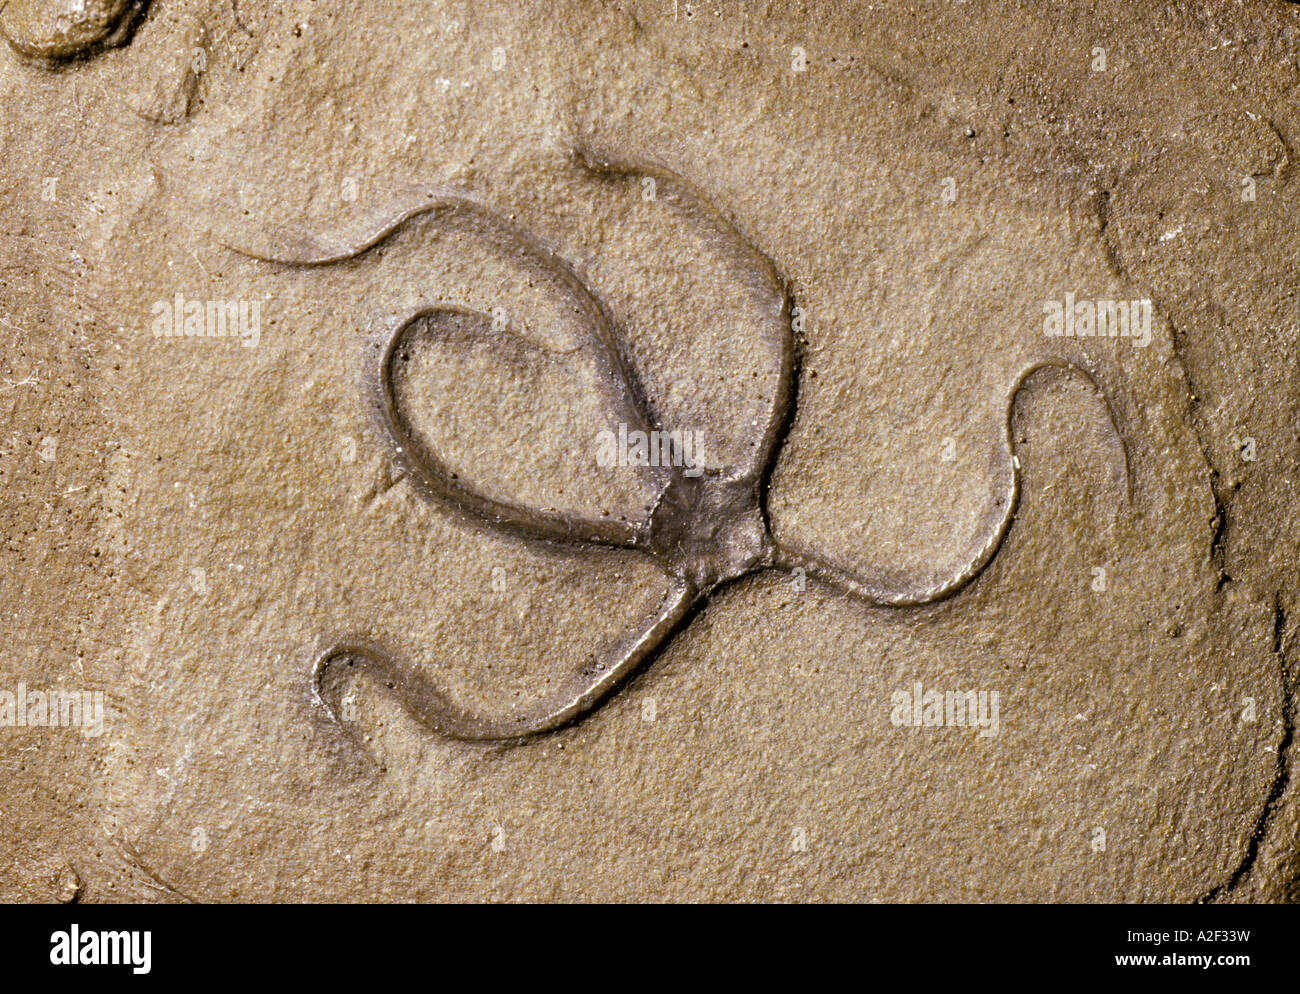 Brittlestar starfish fossil Stock Photo